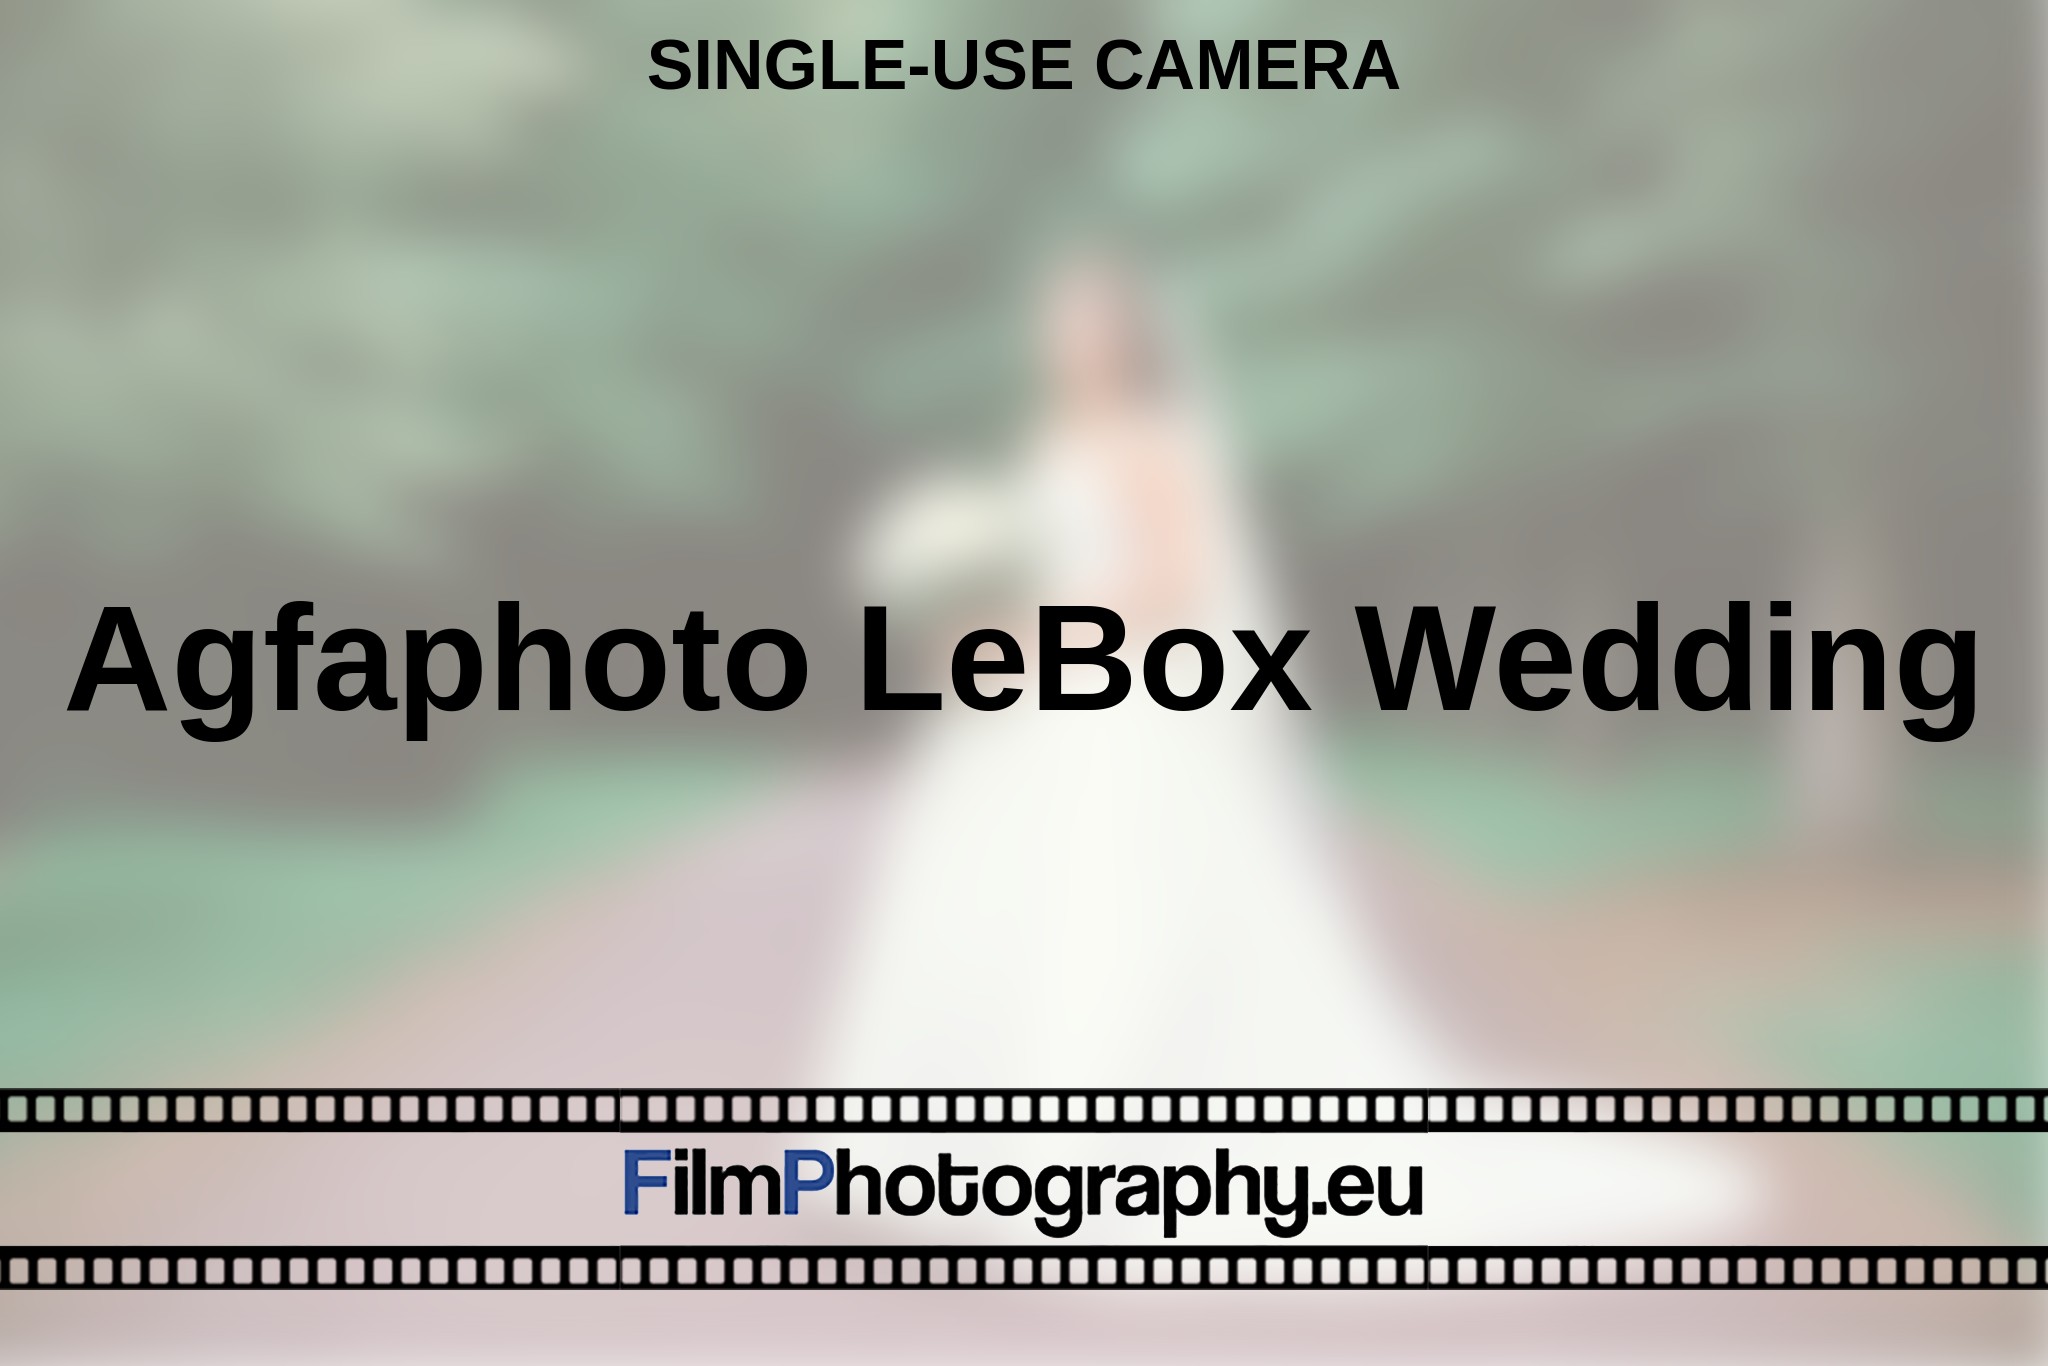 agfaphoto-lebox-wedding-single-use-camera-en-bnv.jpg